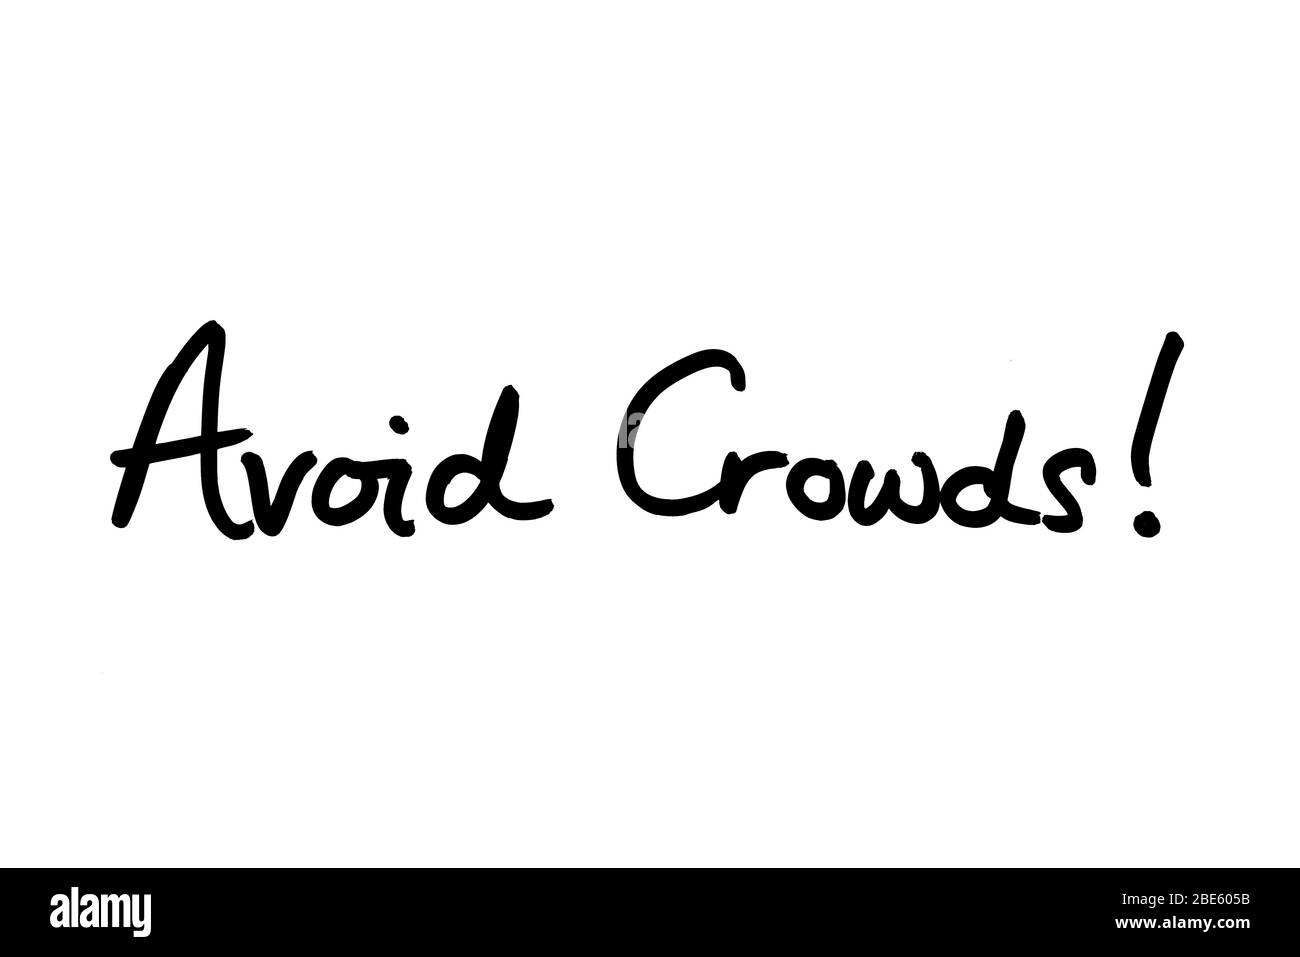 Avoid Crowds! handwritten on a white background. Stock Photo